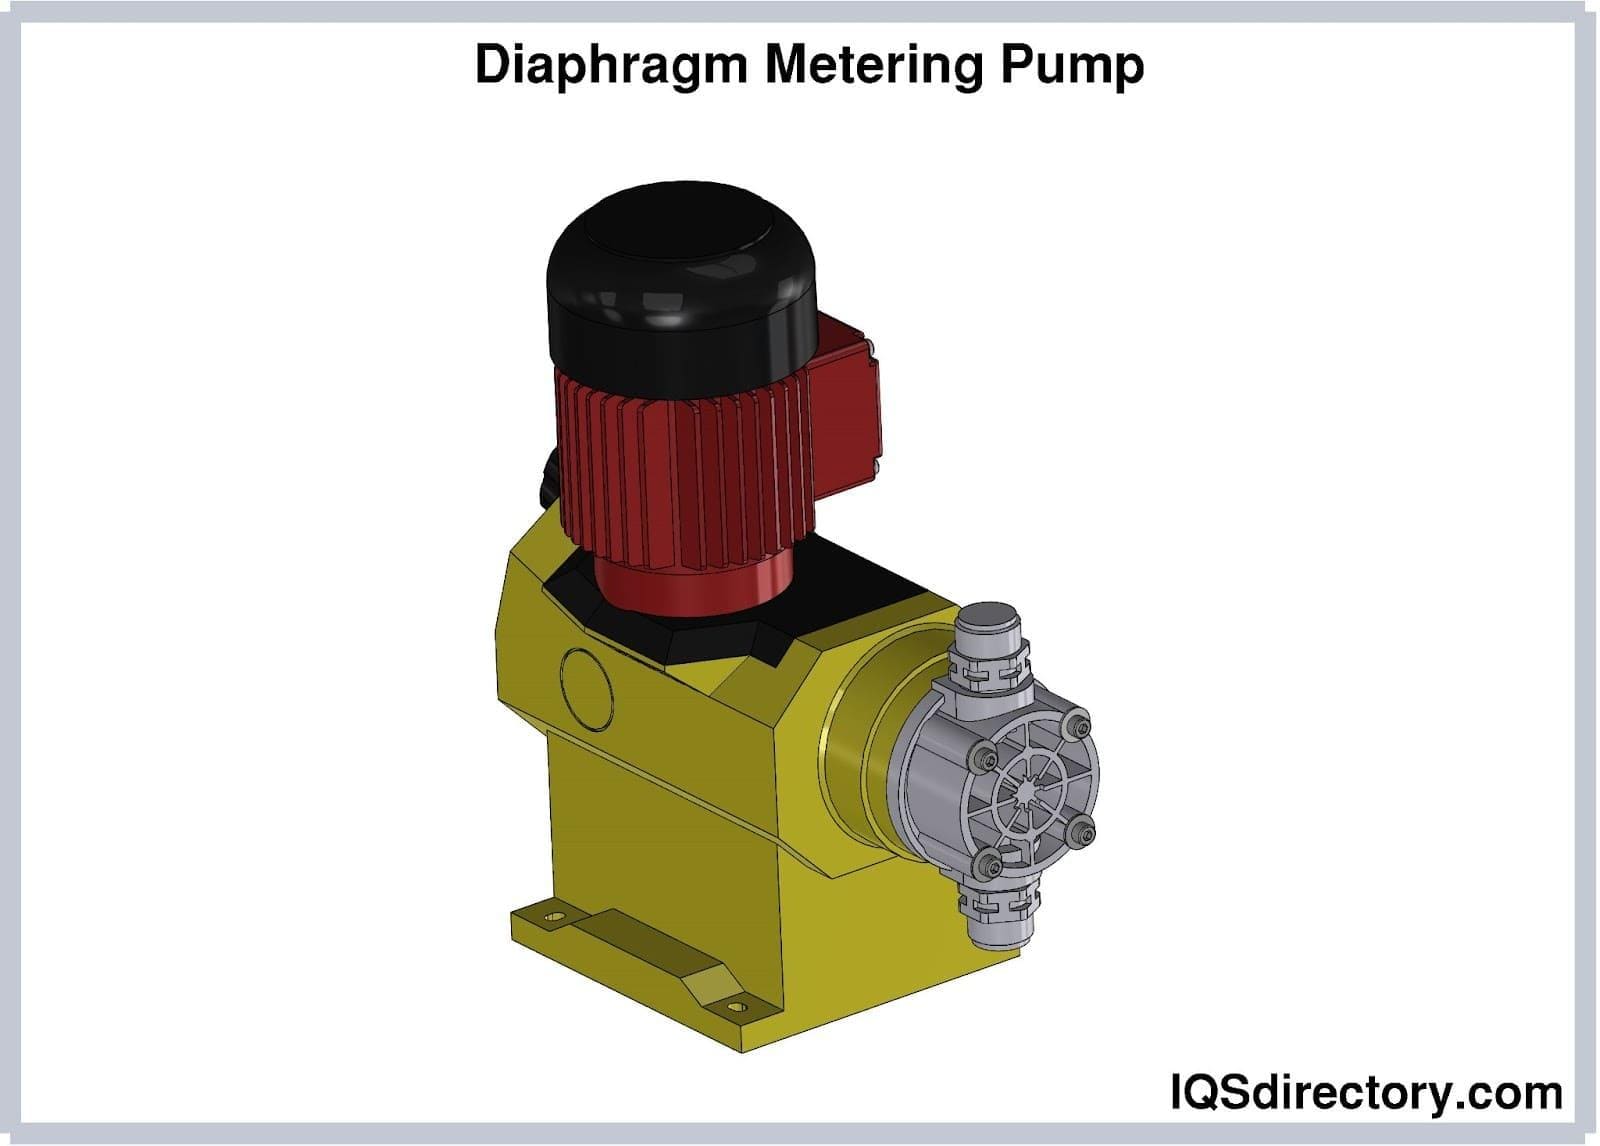 Diaphragm Metering Pump